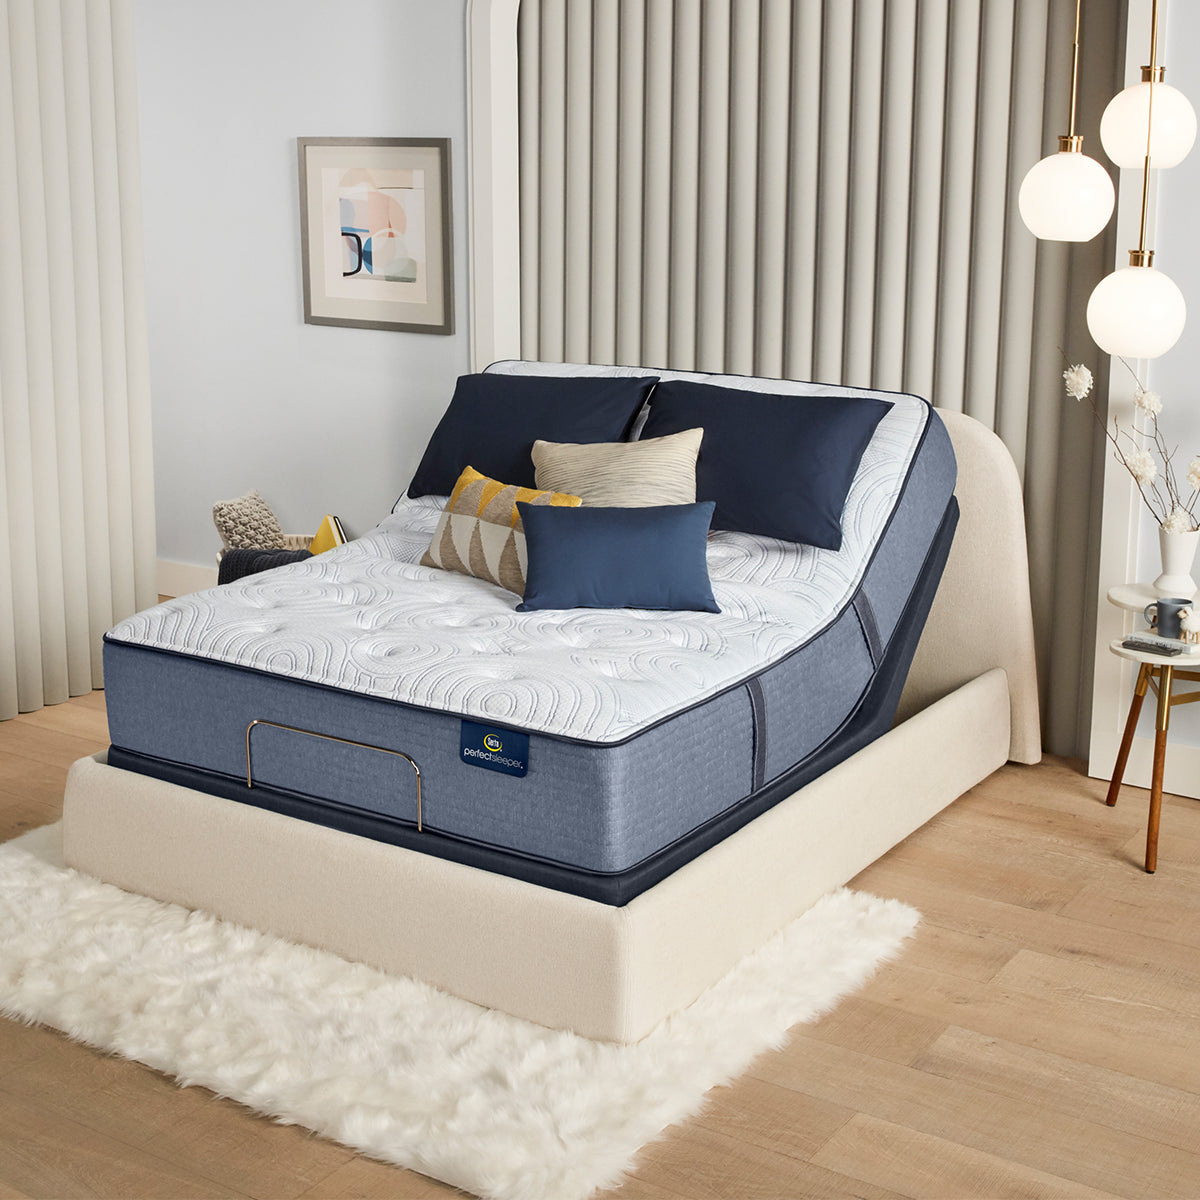 Serta Perfect Sleeper Aruba Mattress On Adjustable Base In Bedroom